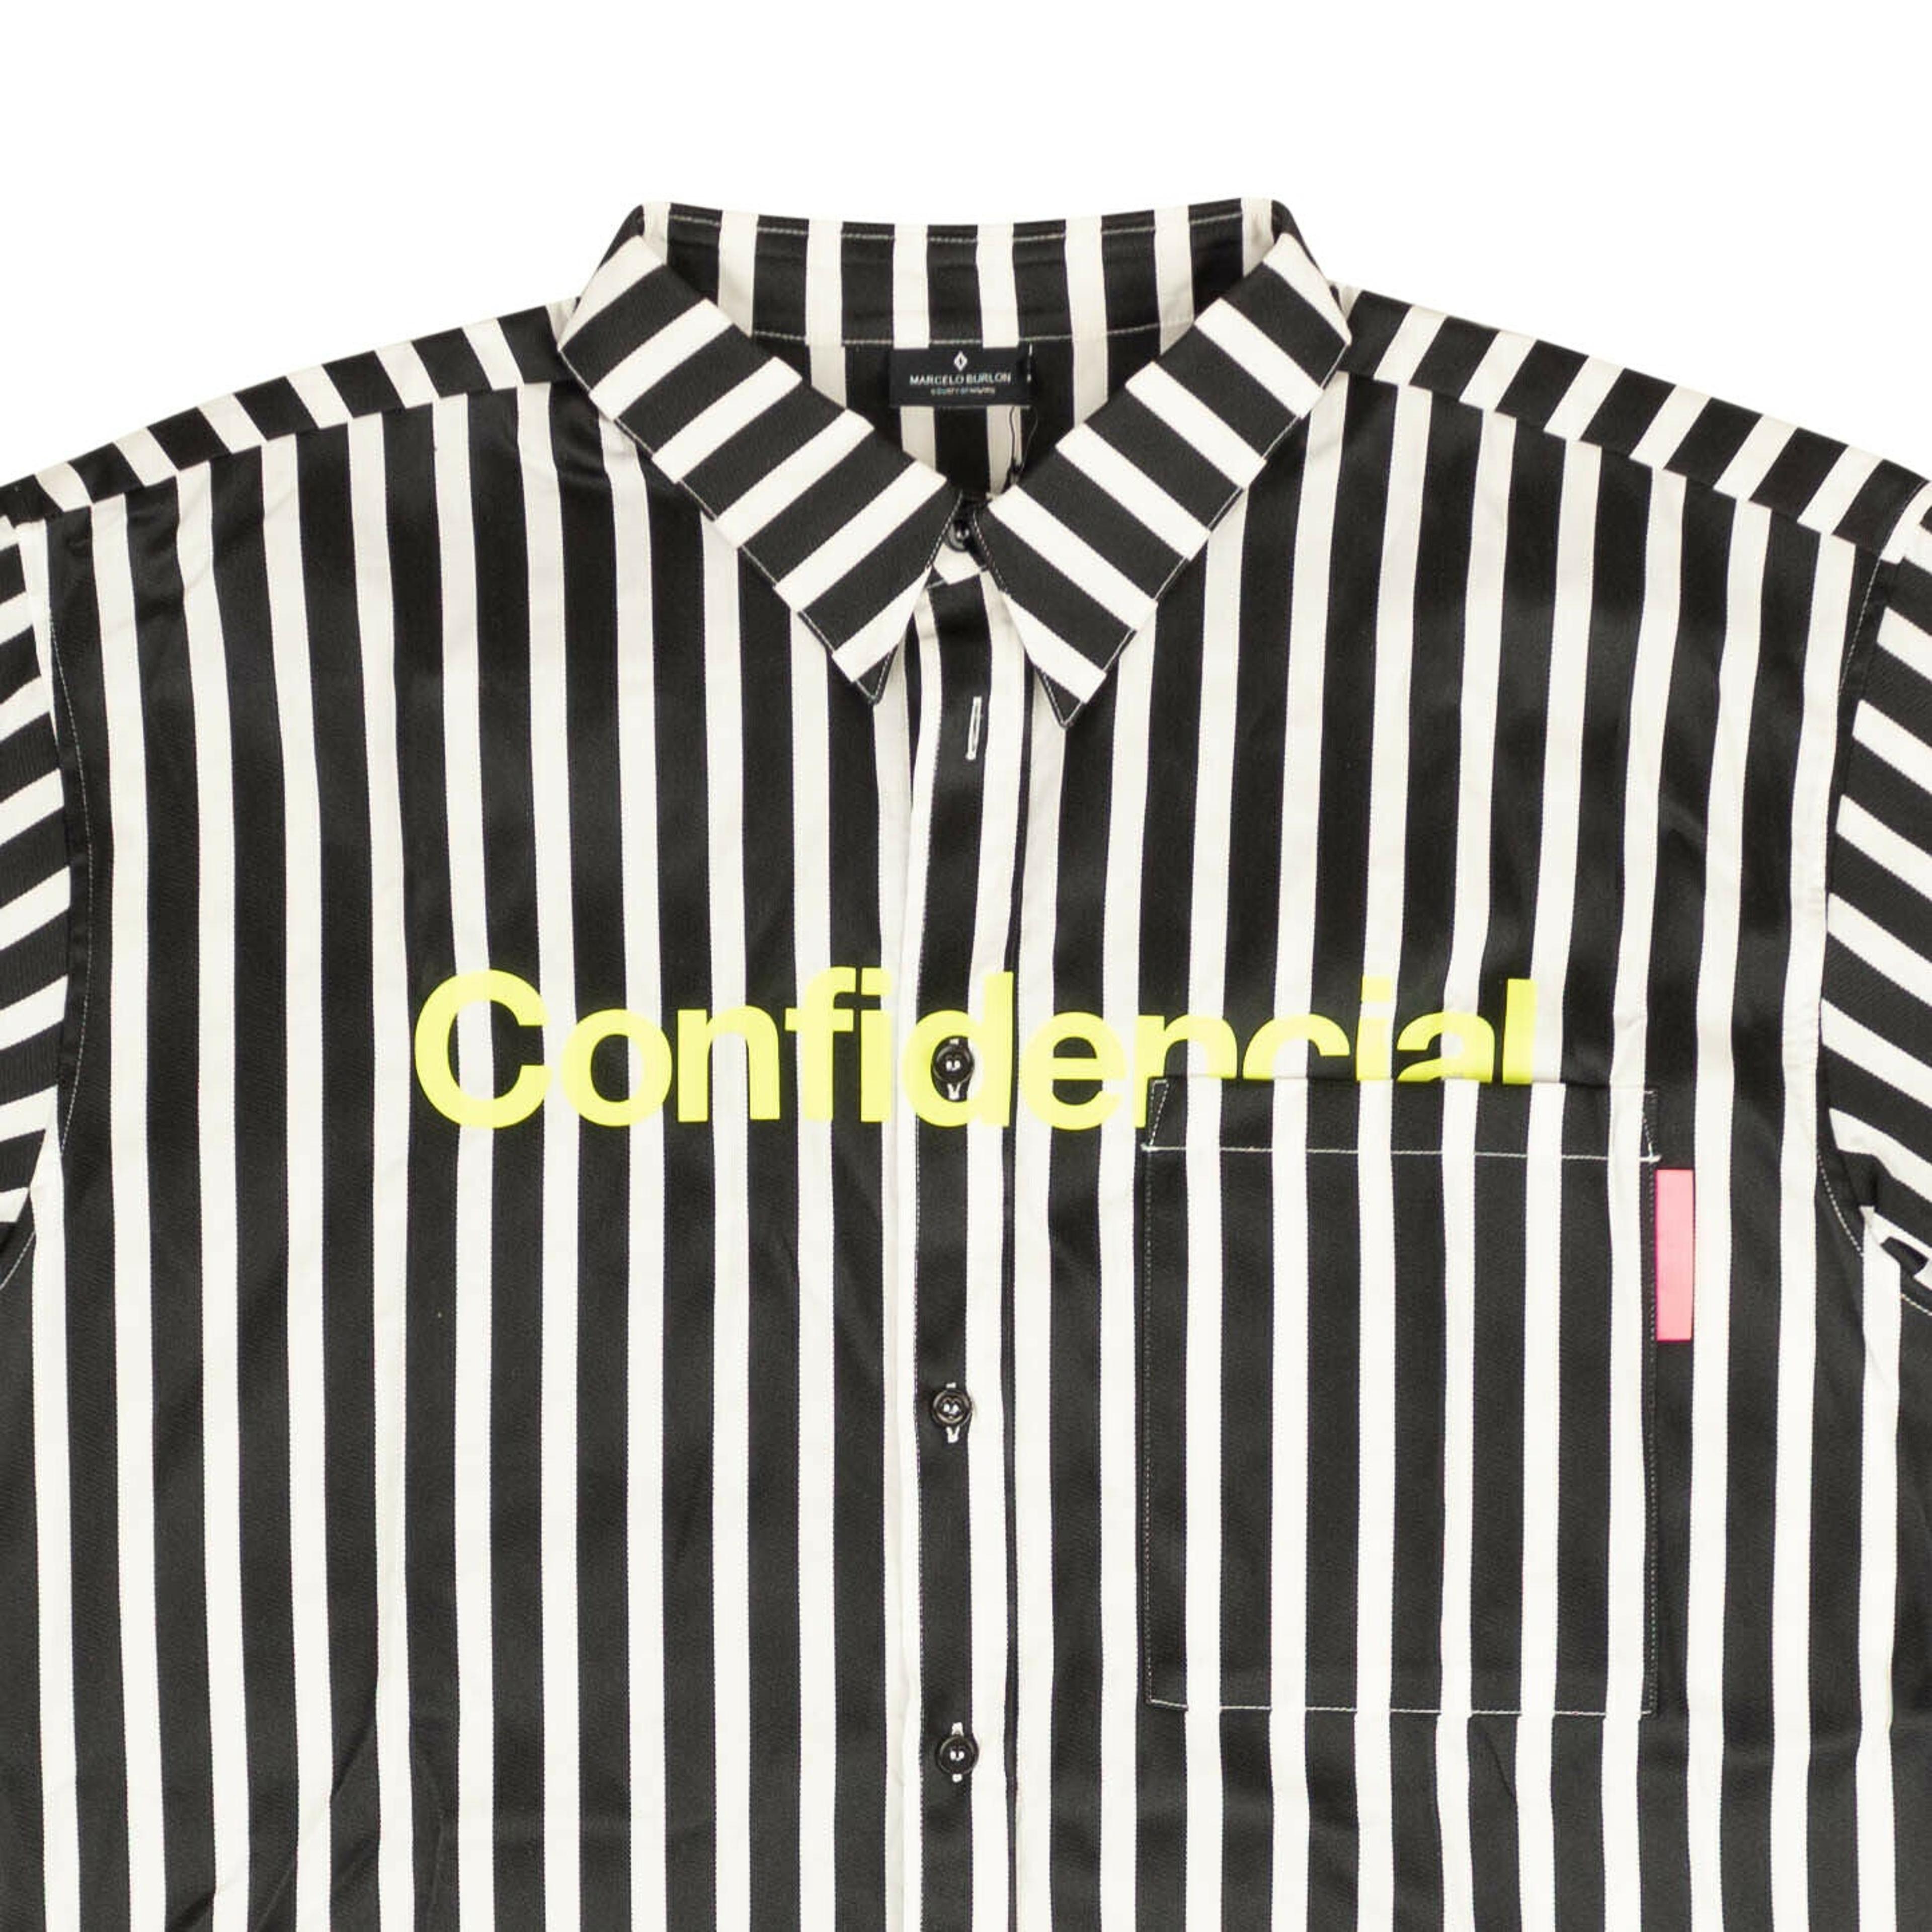 Alternate View 2 of Marcelo Burlon Striped Confidencial Shirt - Black/White